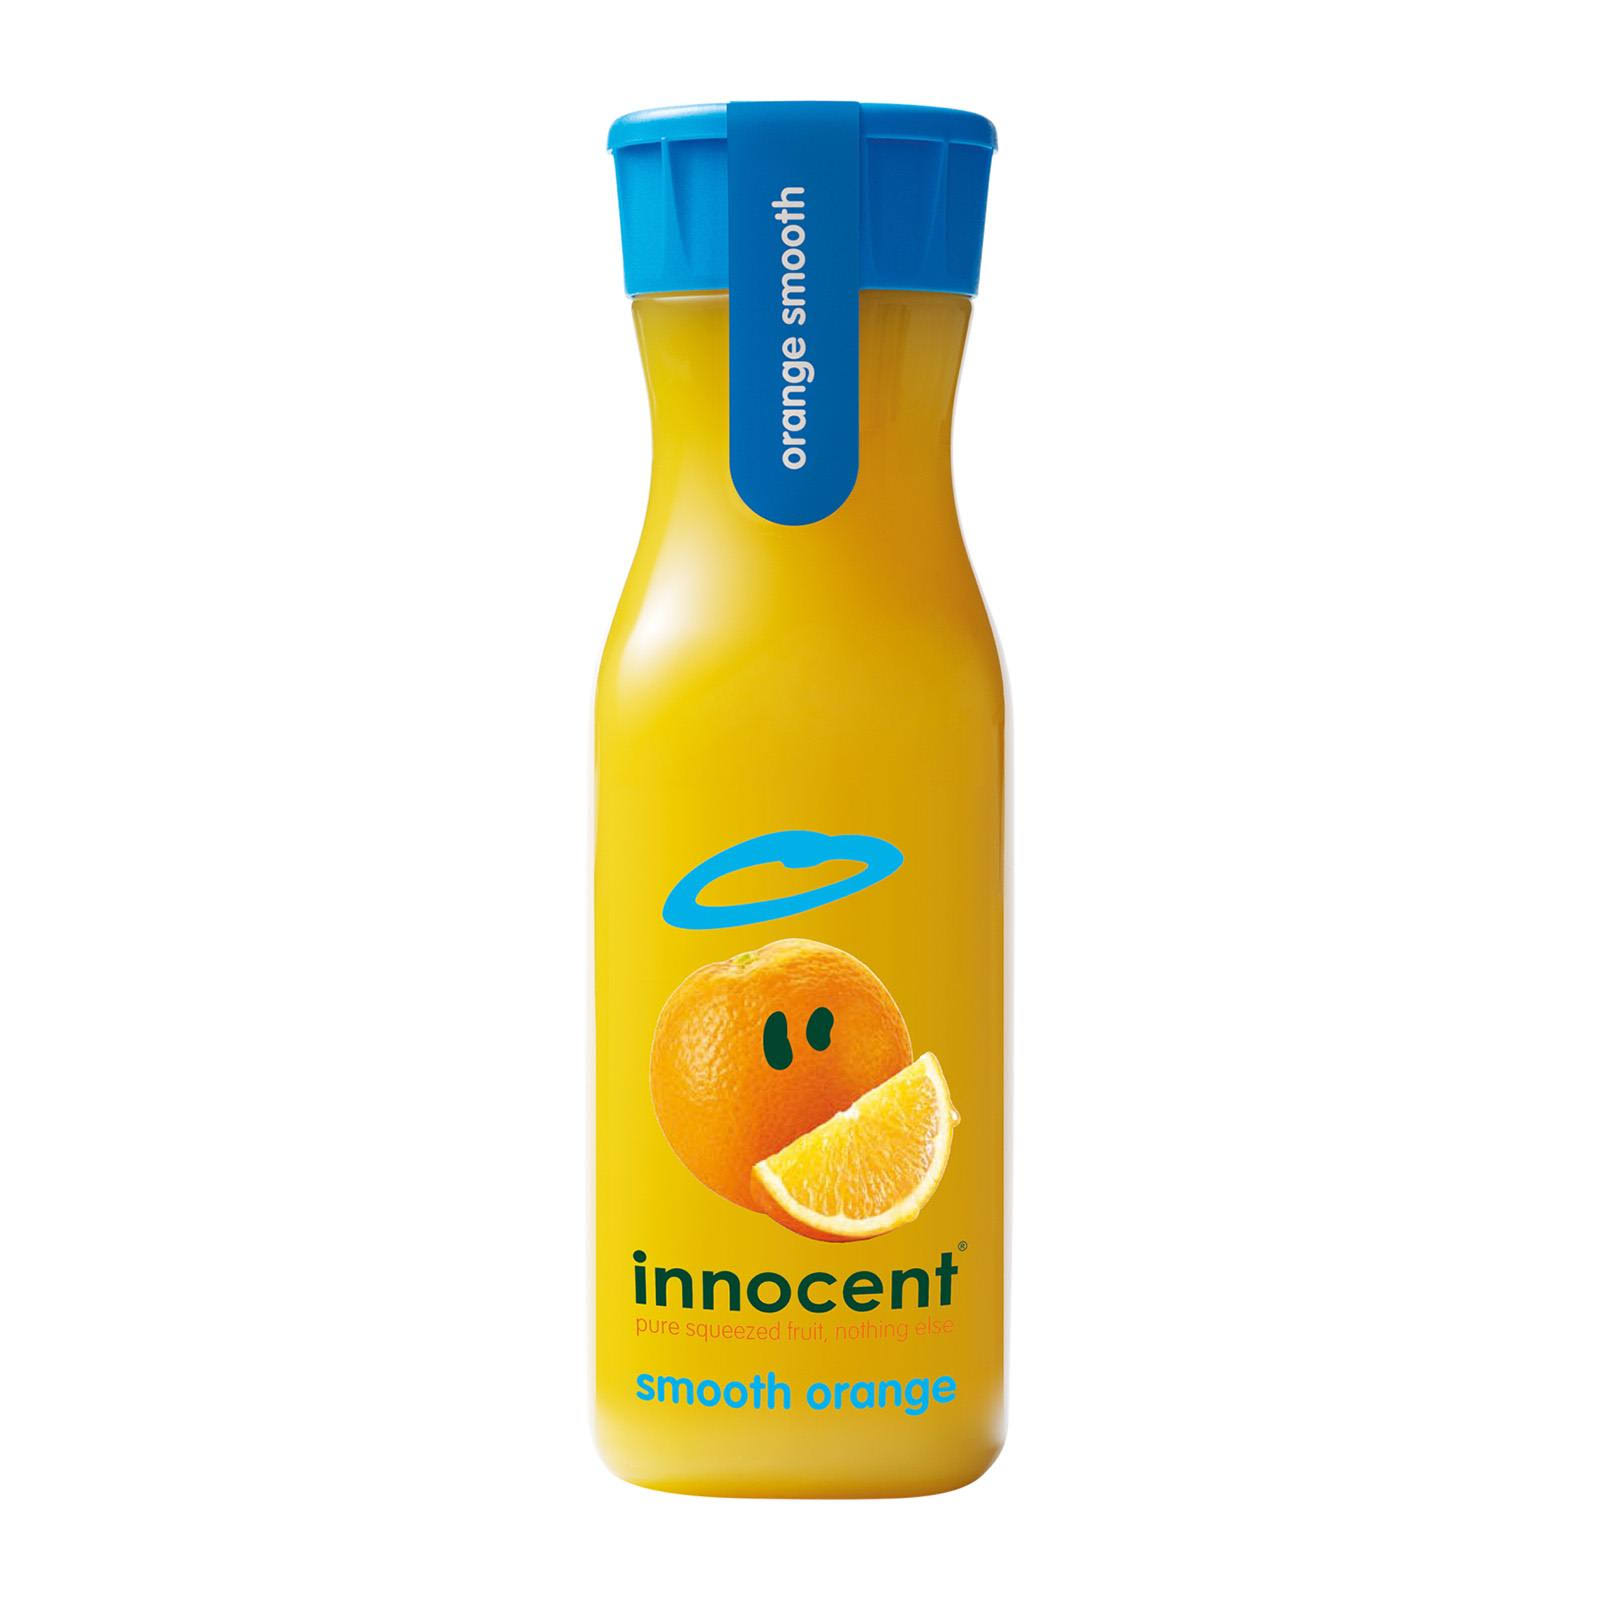 Innocent Juice - Smooth Orange, 330ml